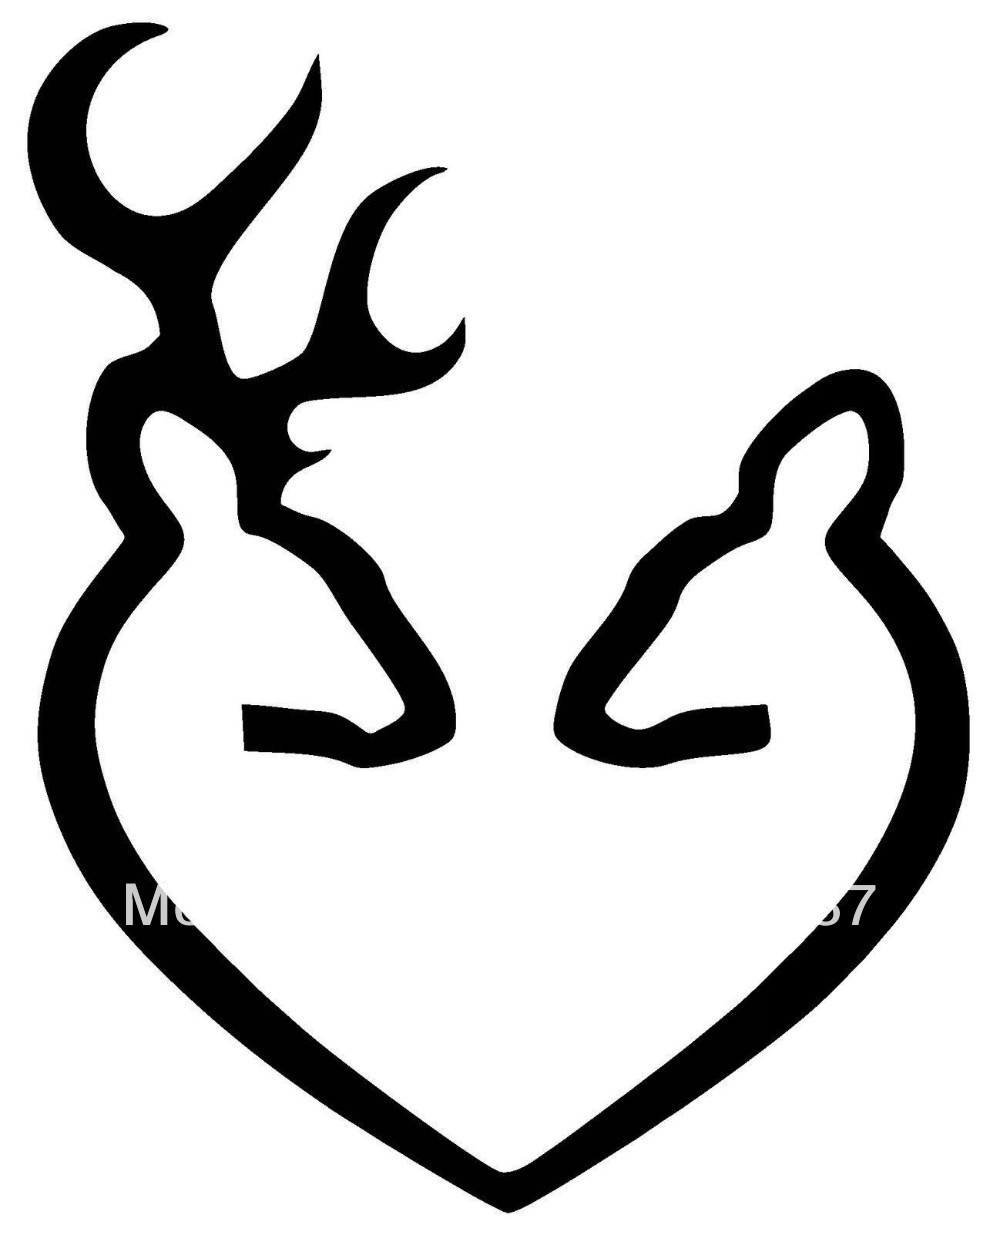 buck and doe heart tattoo - Clip Art Library